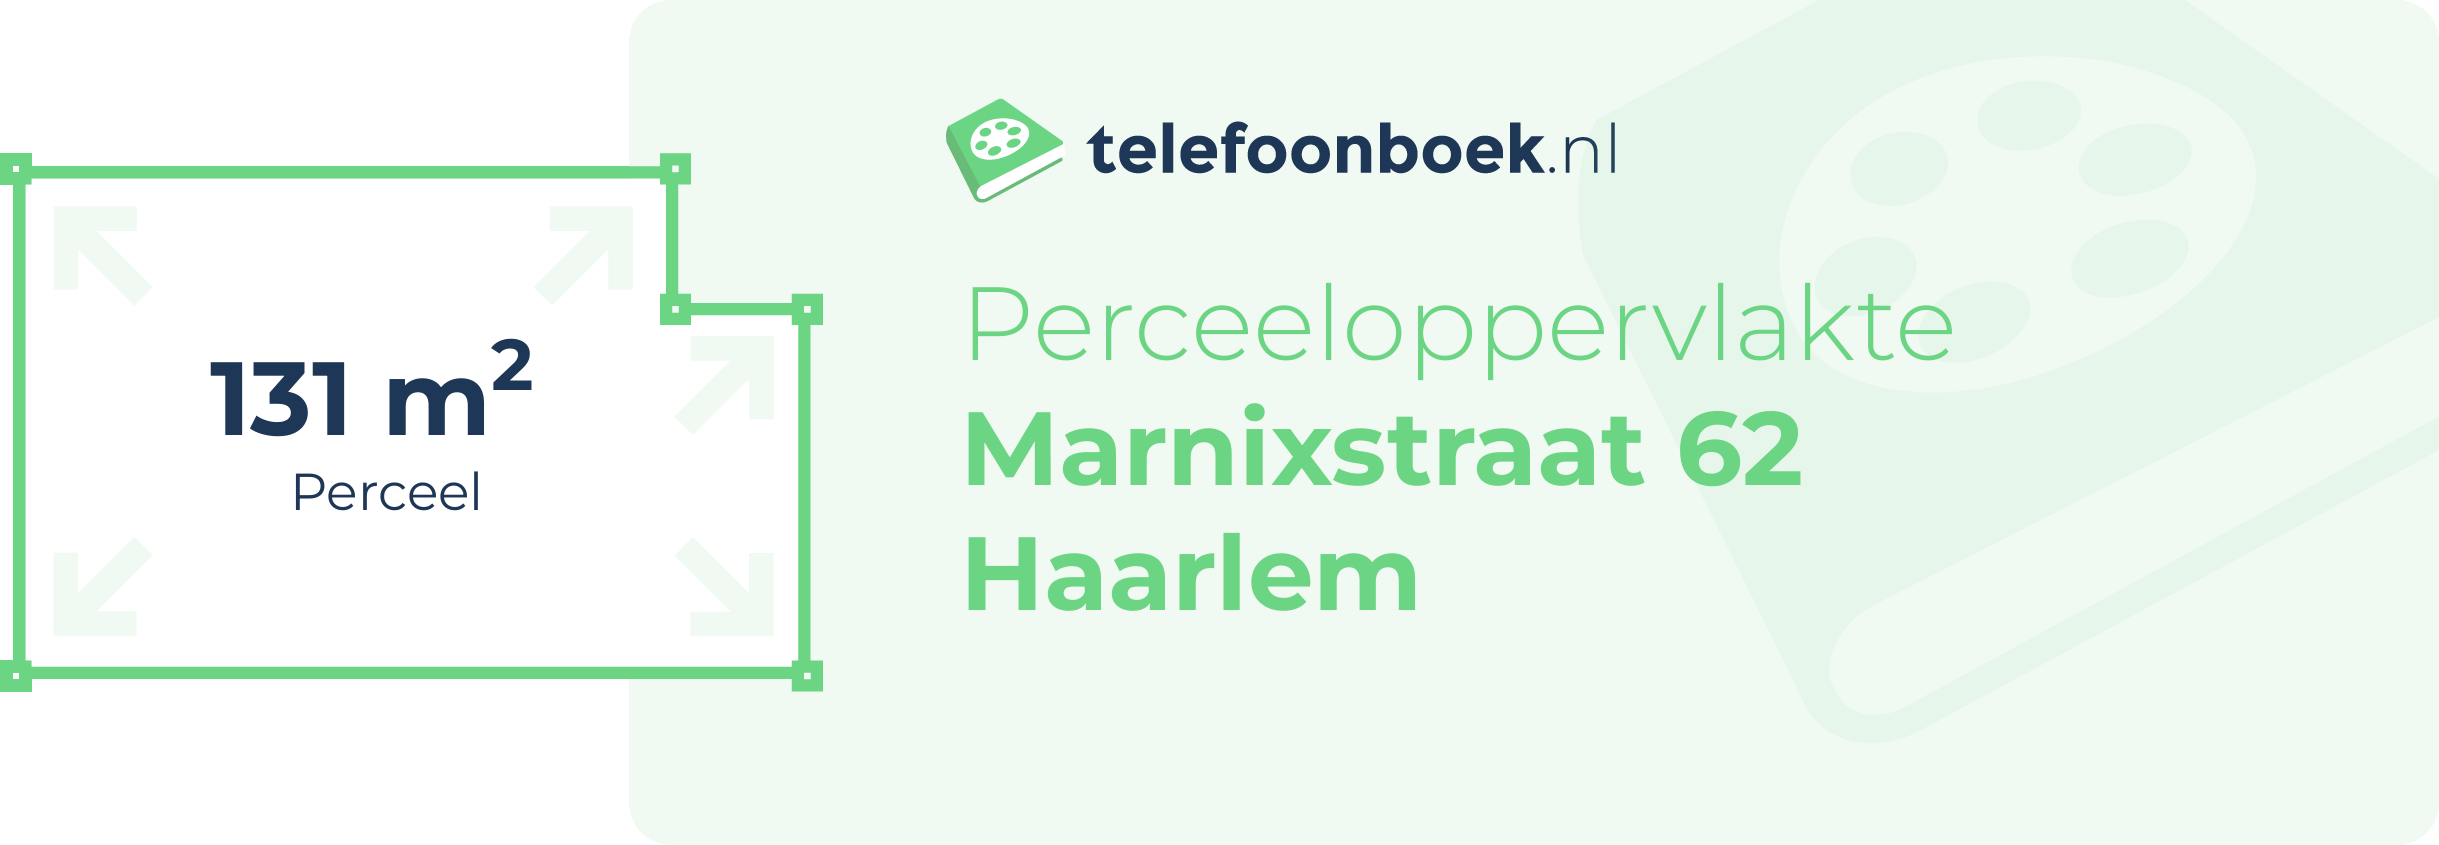 Perceeloppervlakte Marnixstraat 62 Haarlem